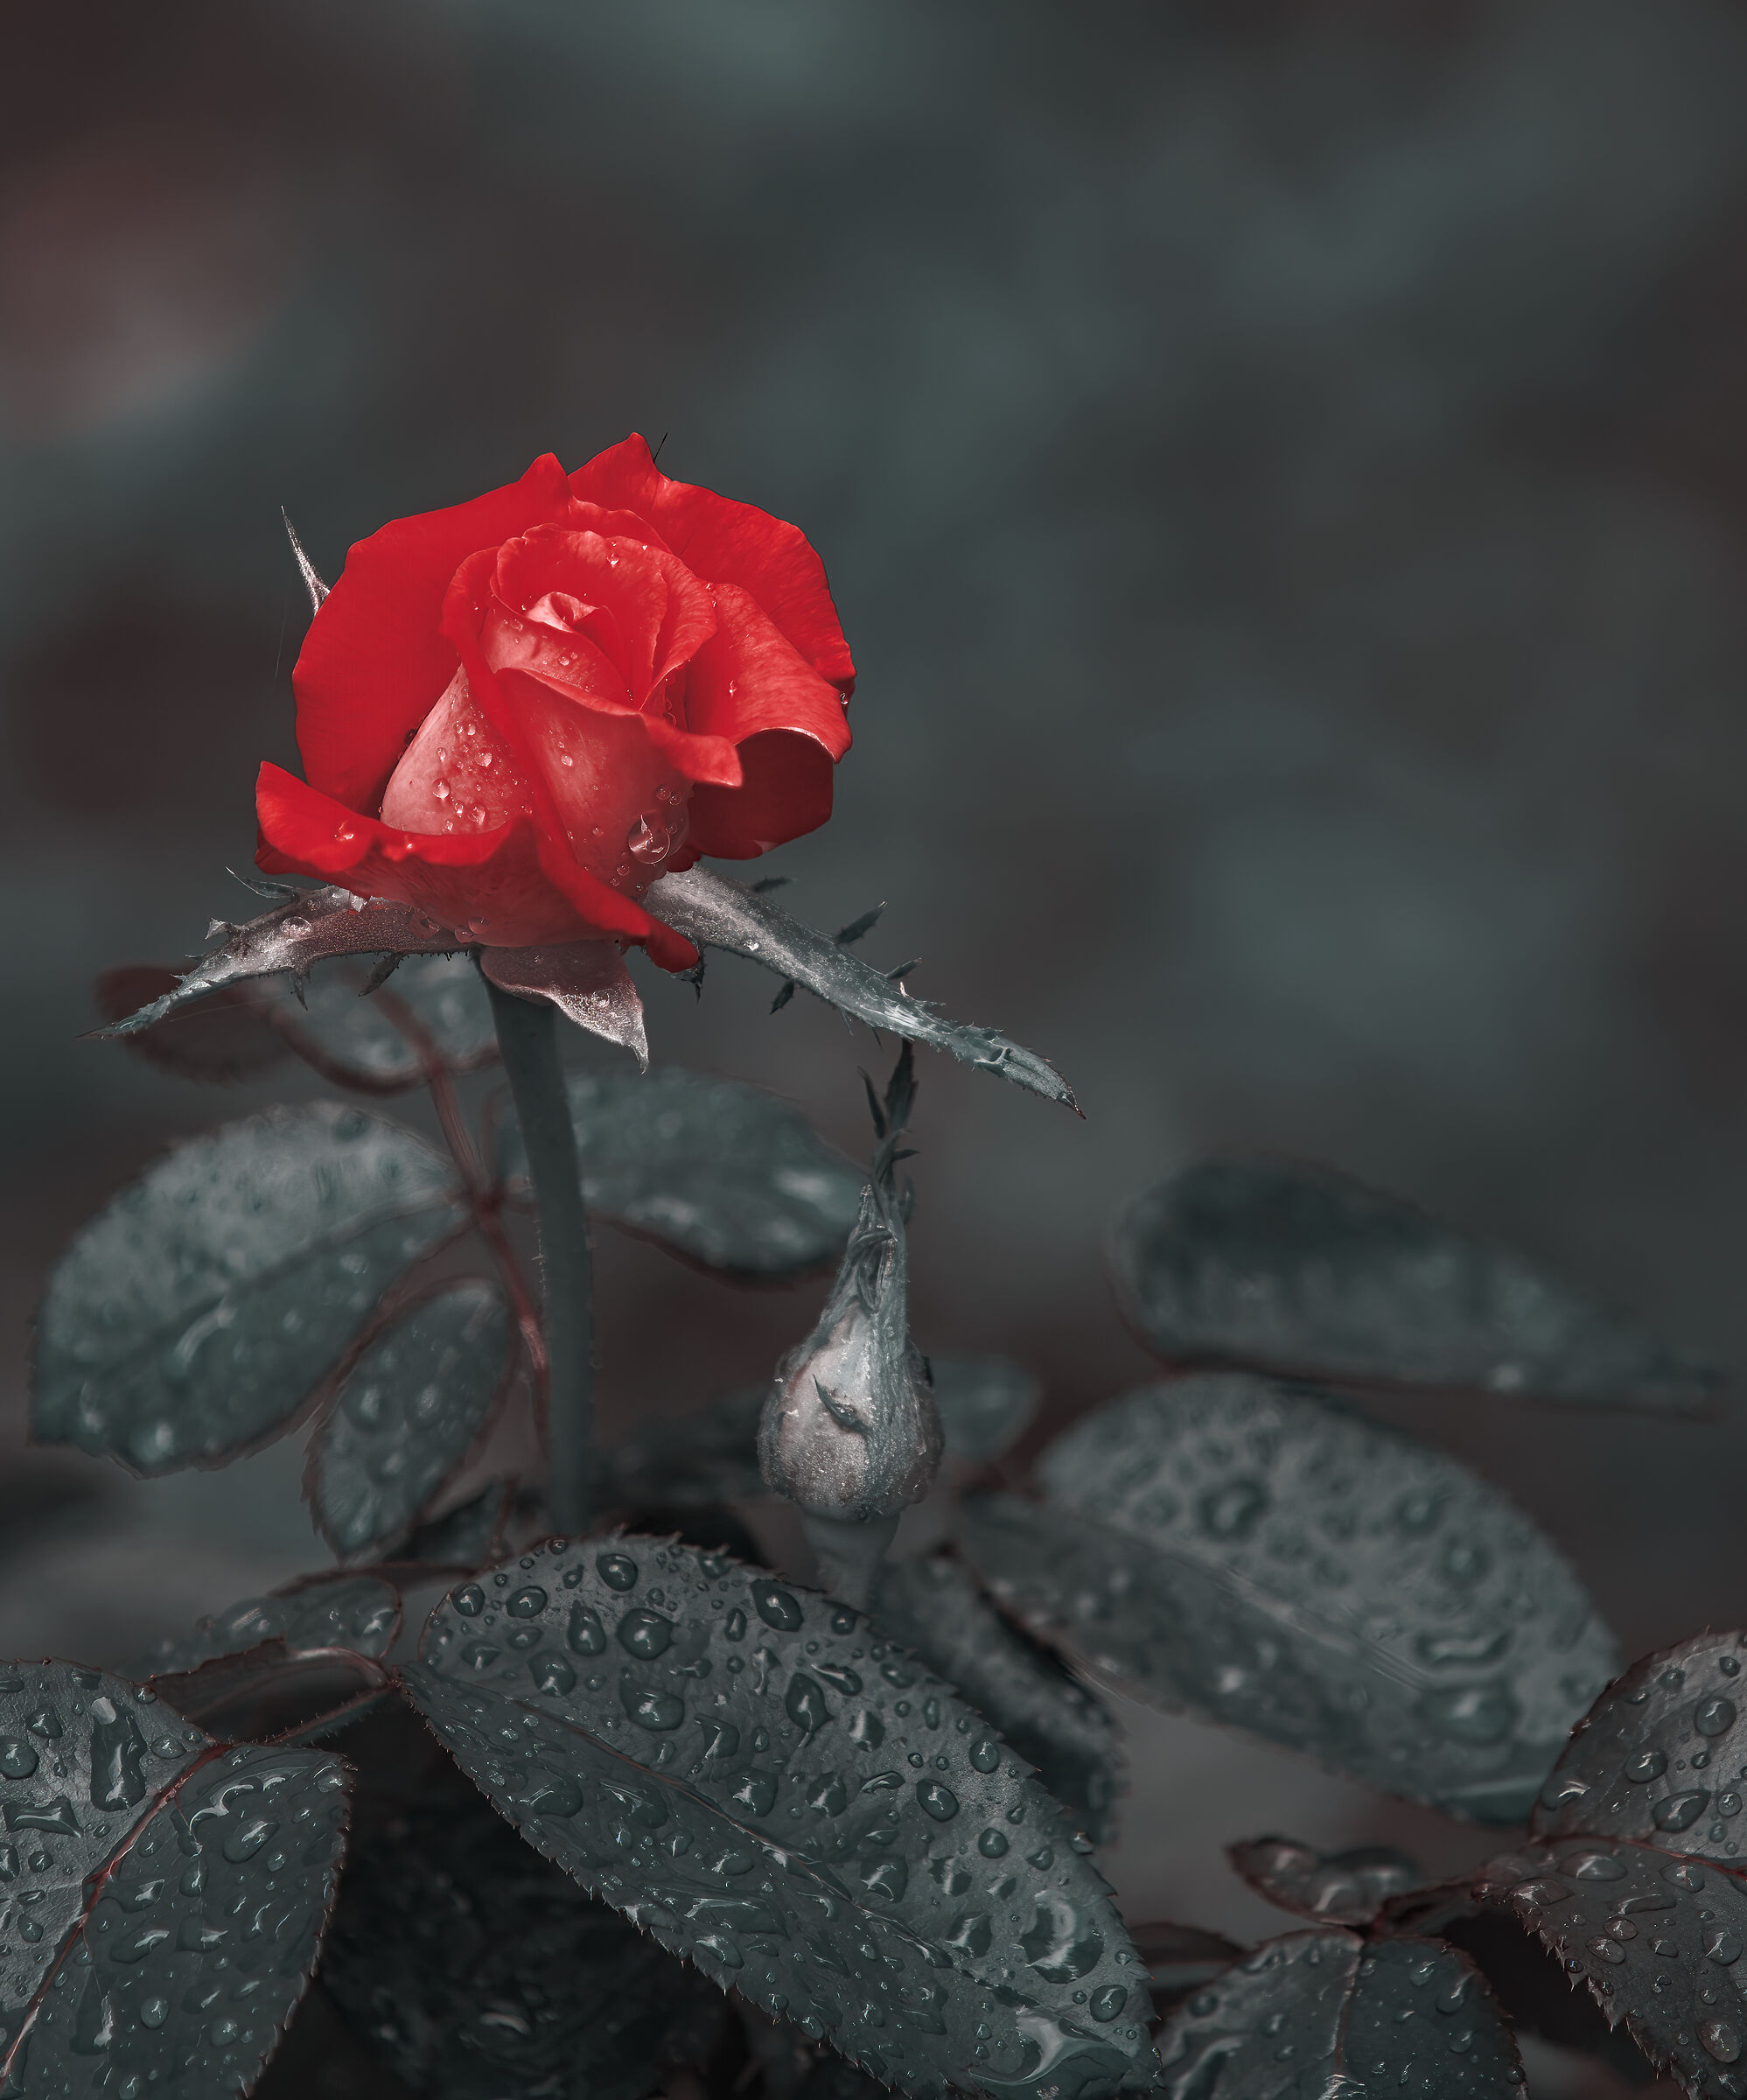 The rain in the rose garden...